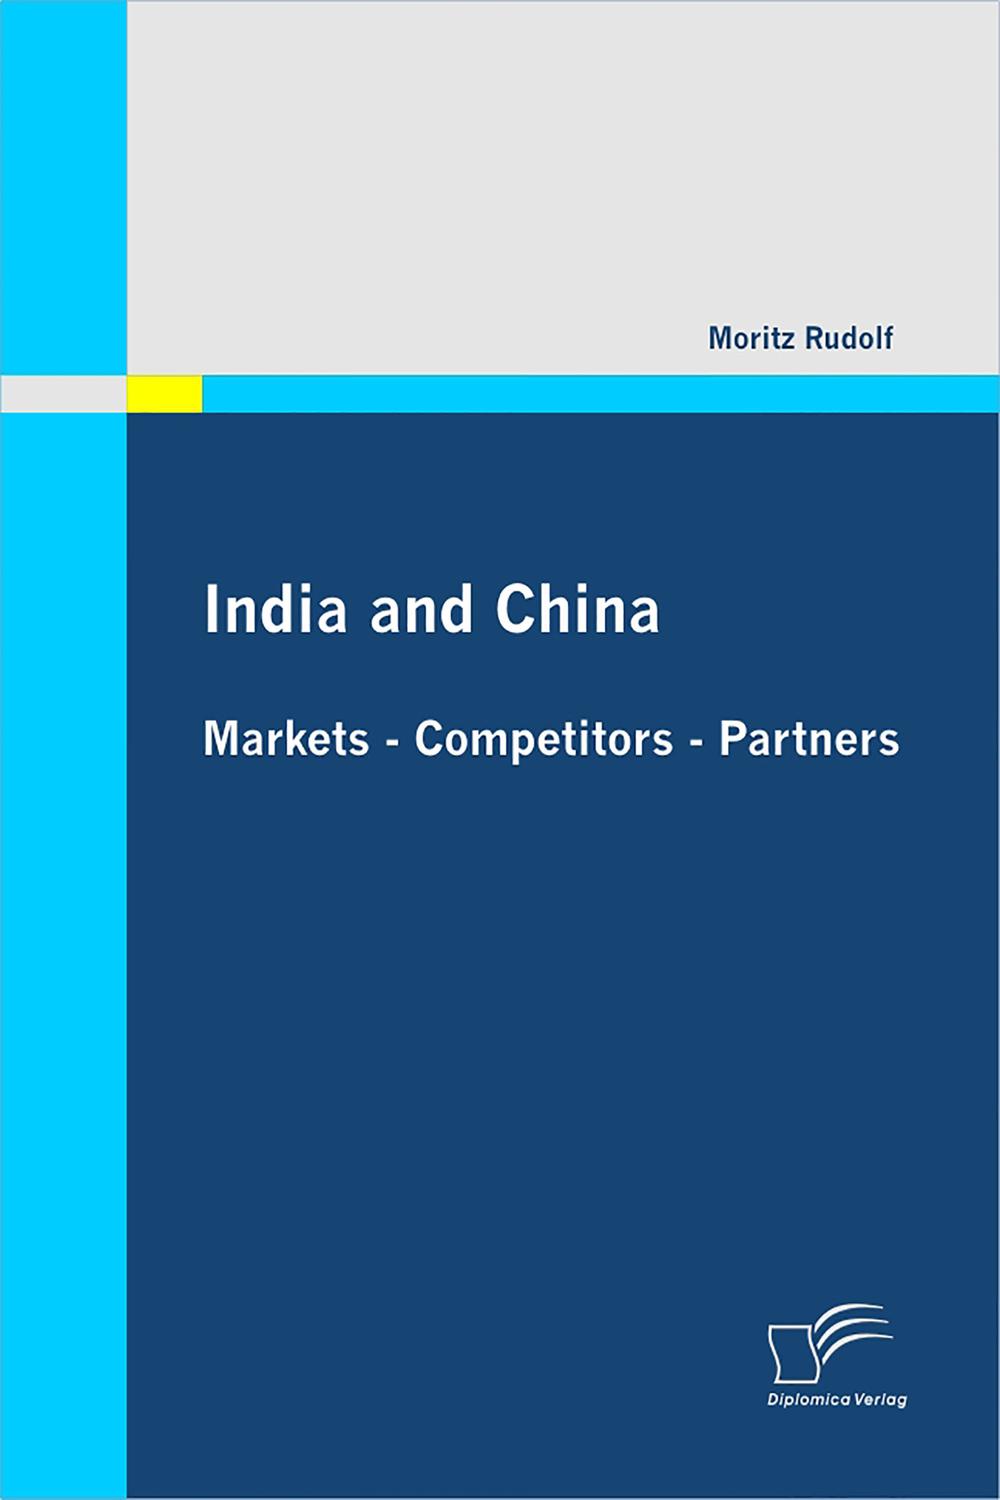 India and China: Markets - Competitors - Partners - Moritz Rudolf